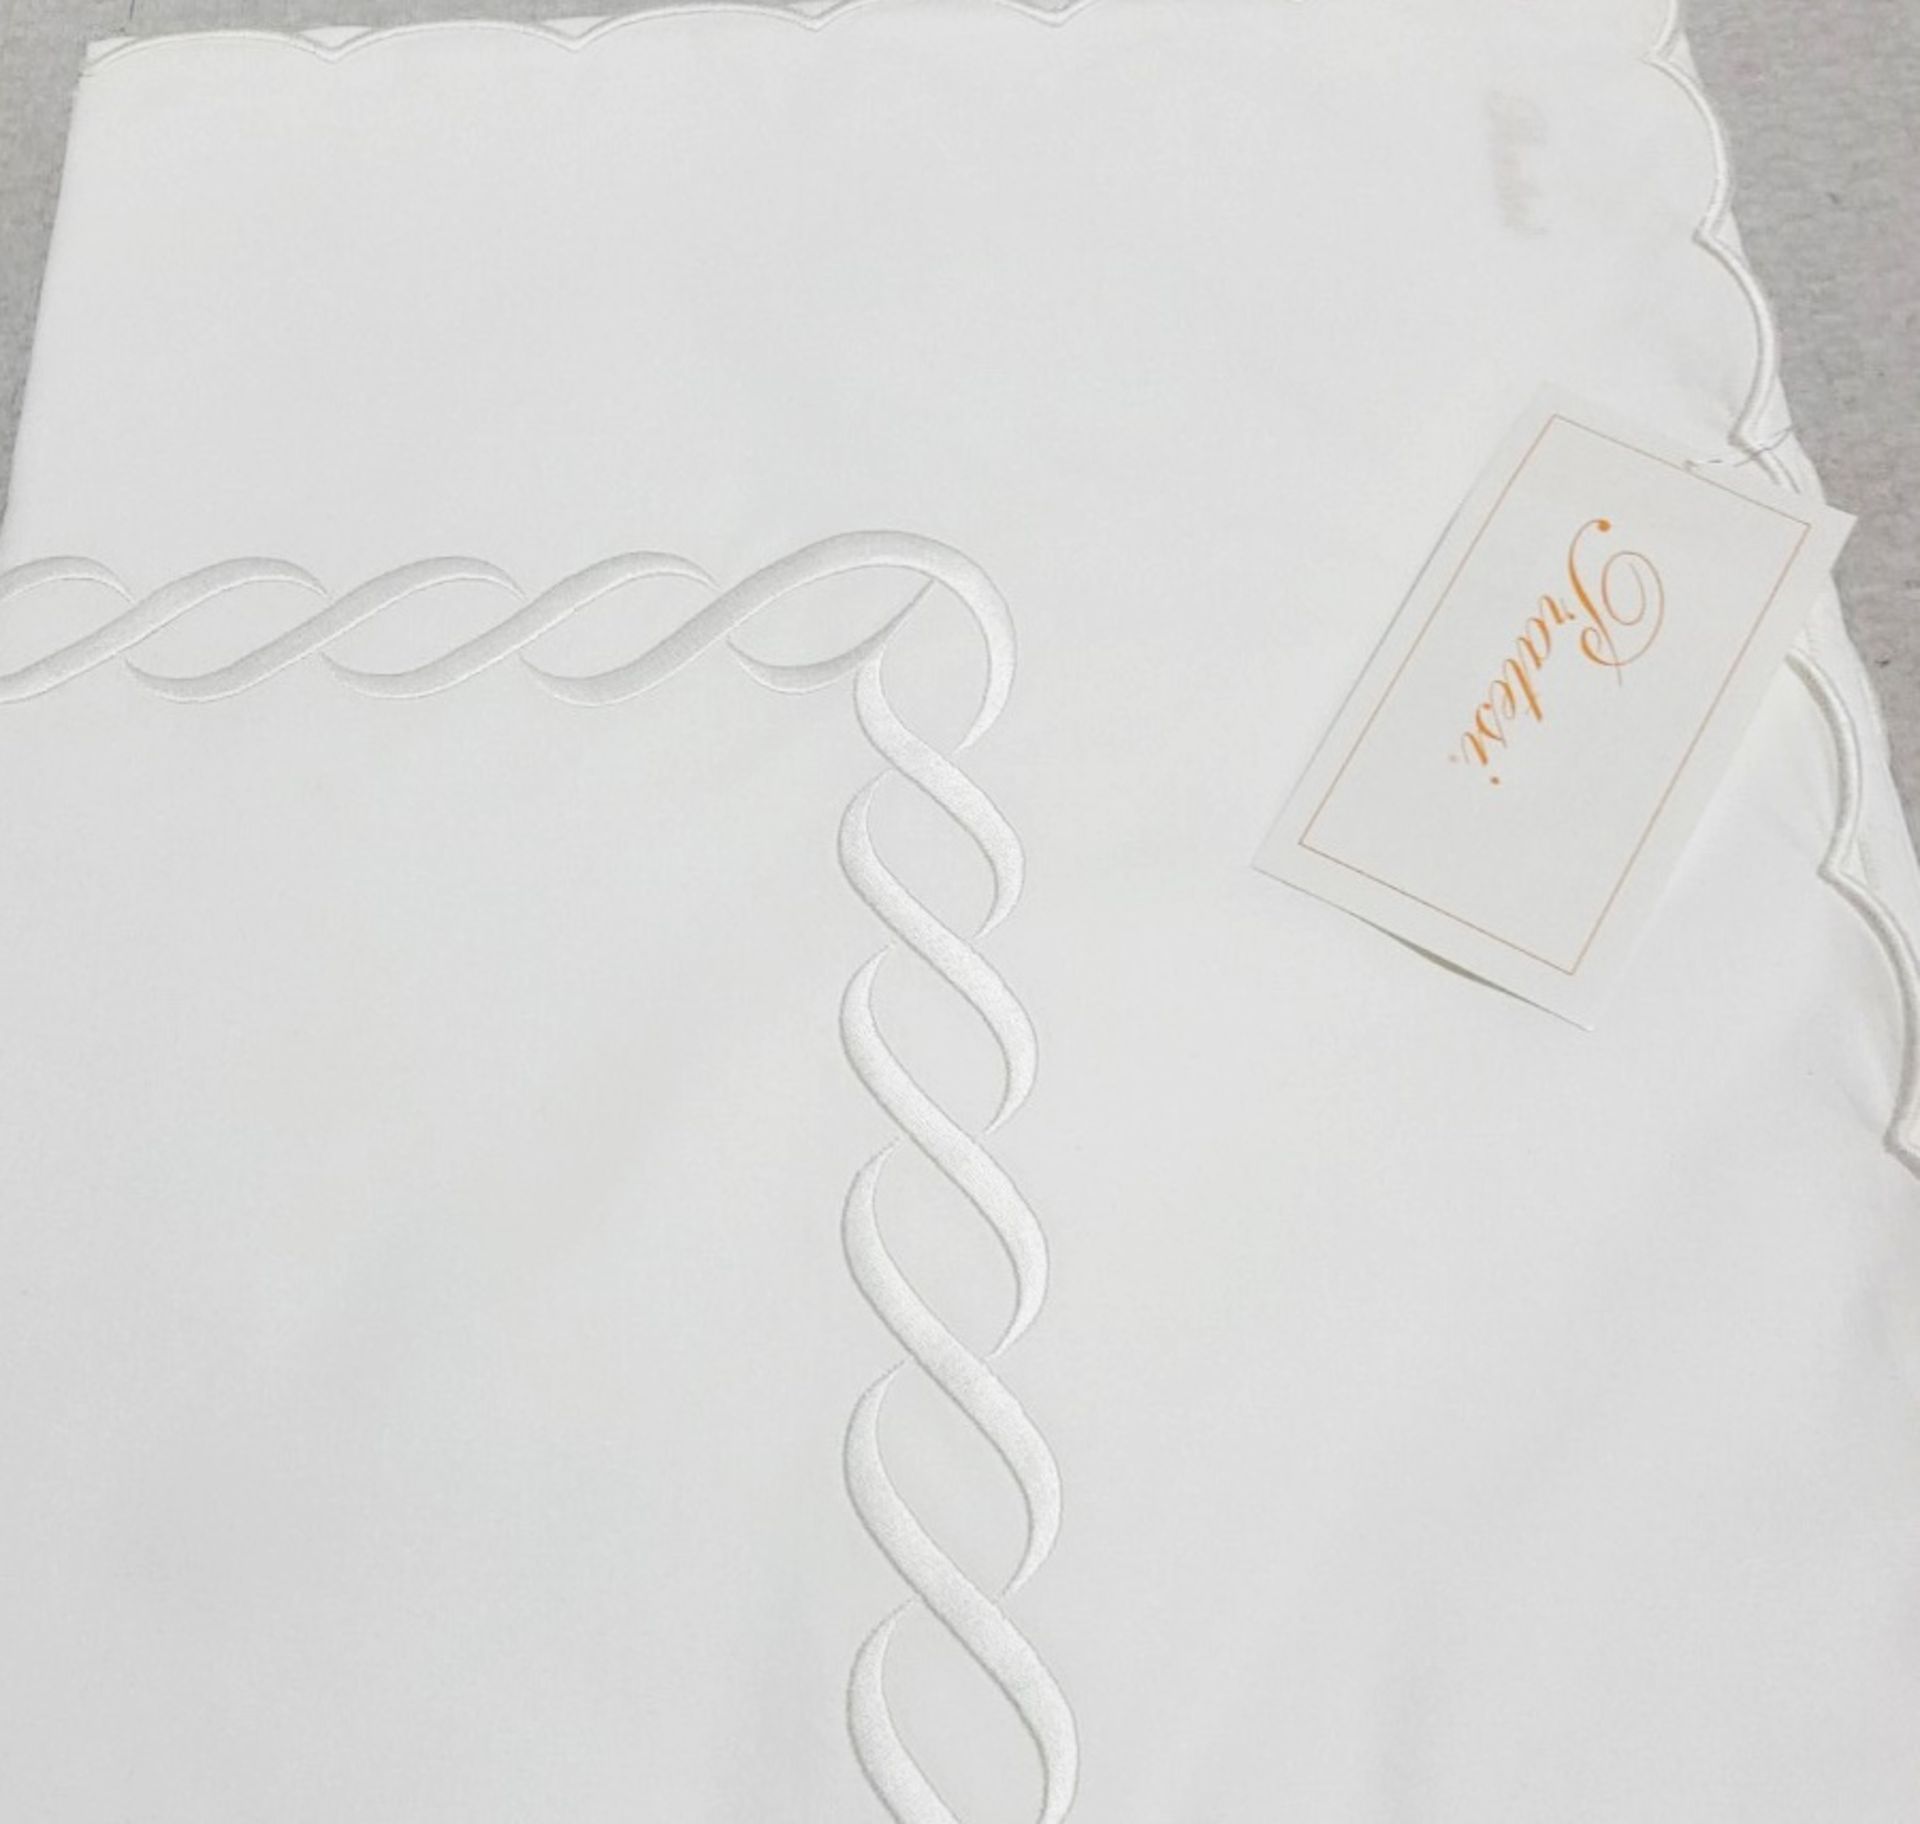 1 x PRATESI Treccia White Forever Embroidered Angel Skin Top Sheet 305x270cm - Image 4 of 5